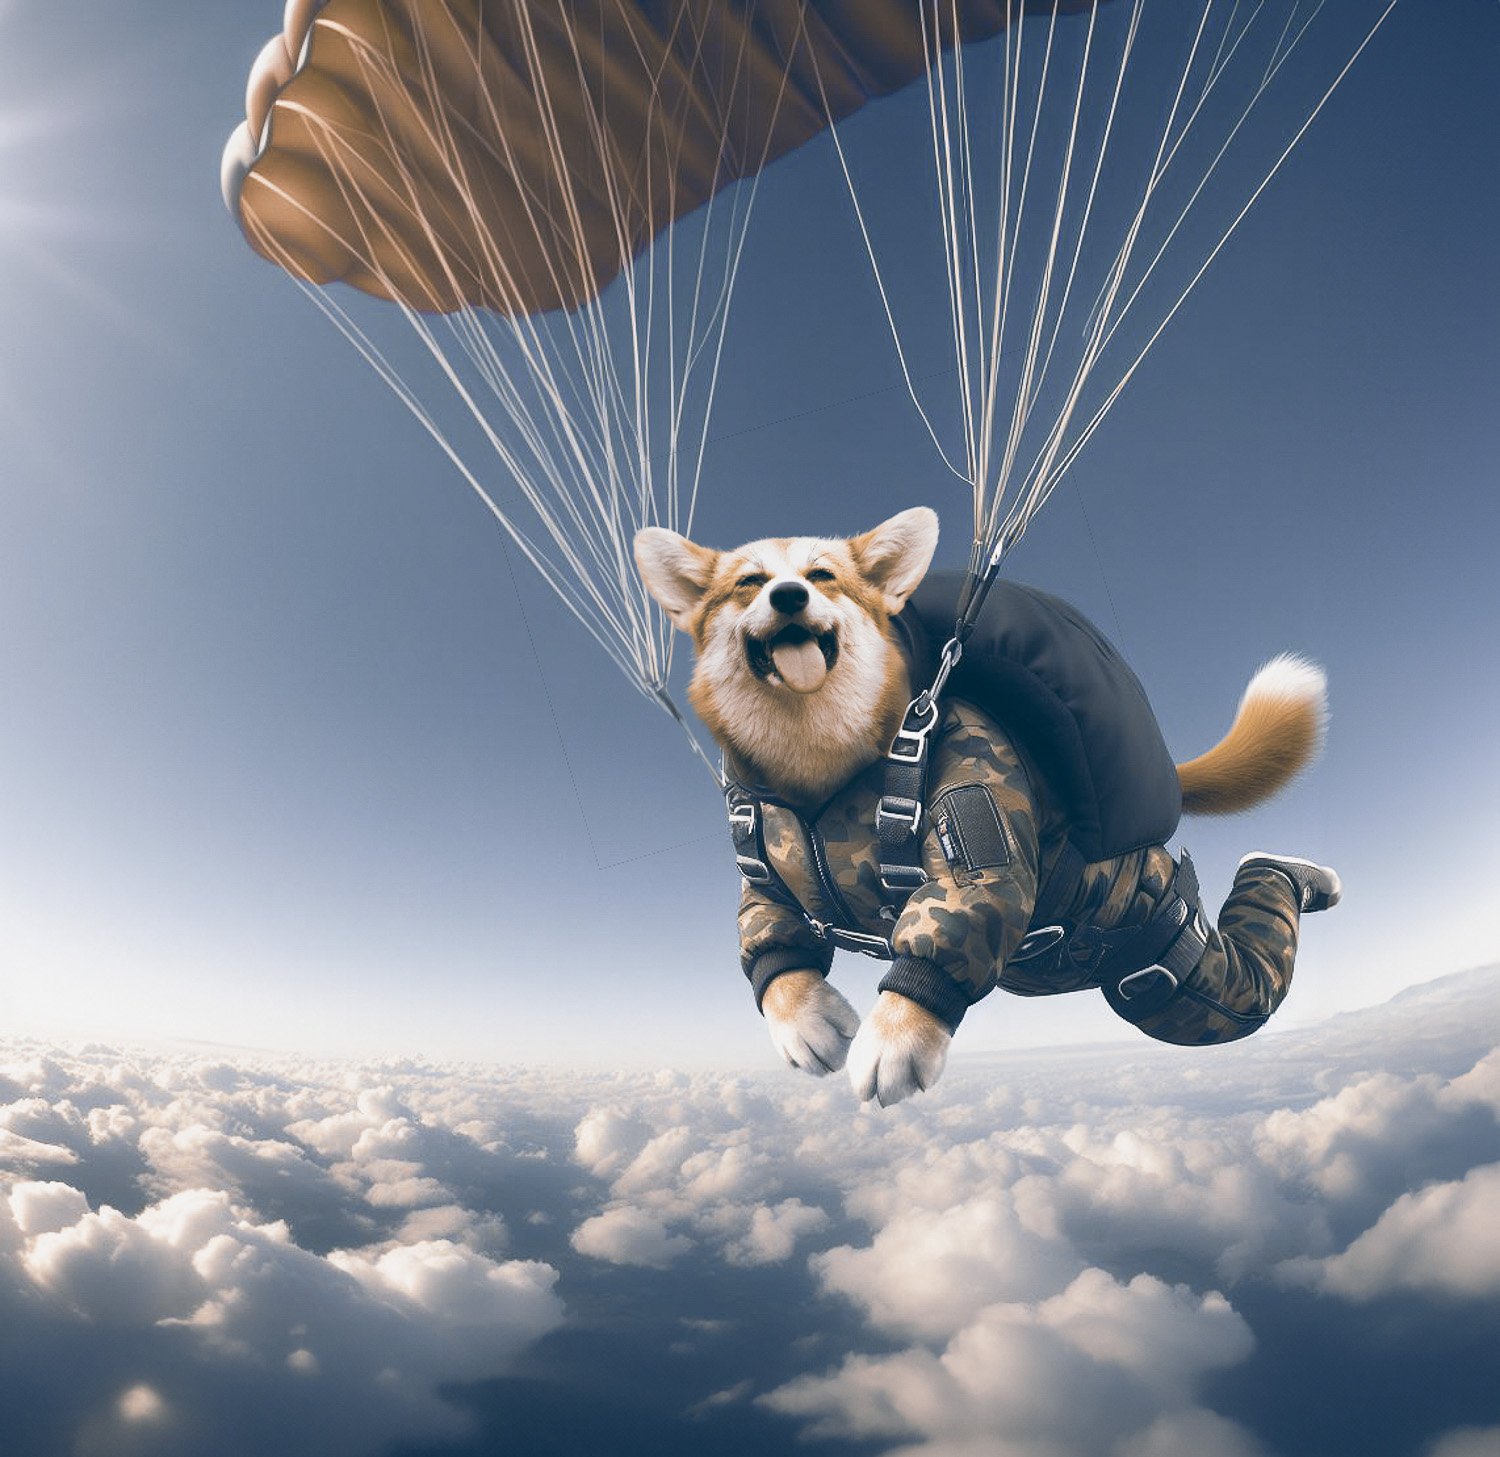 A Corgi dog with its tongue sticking out parachuting high above a cloudy sky sky